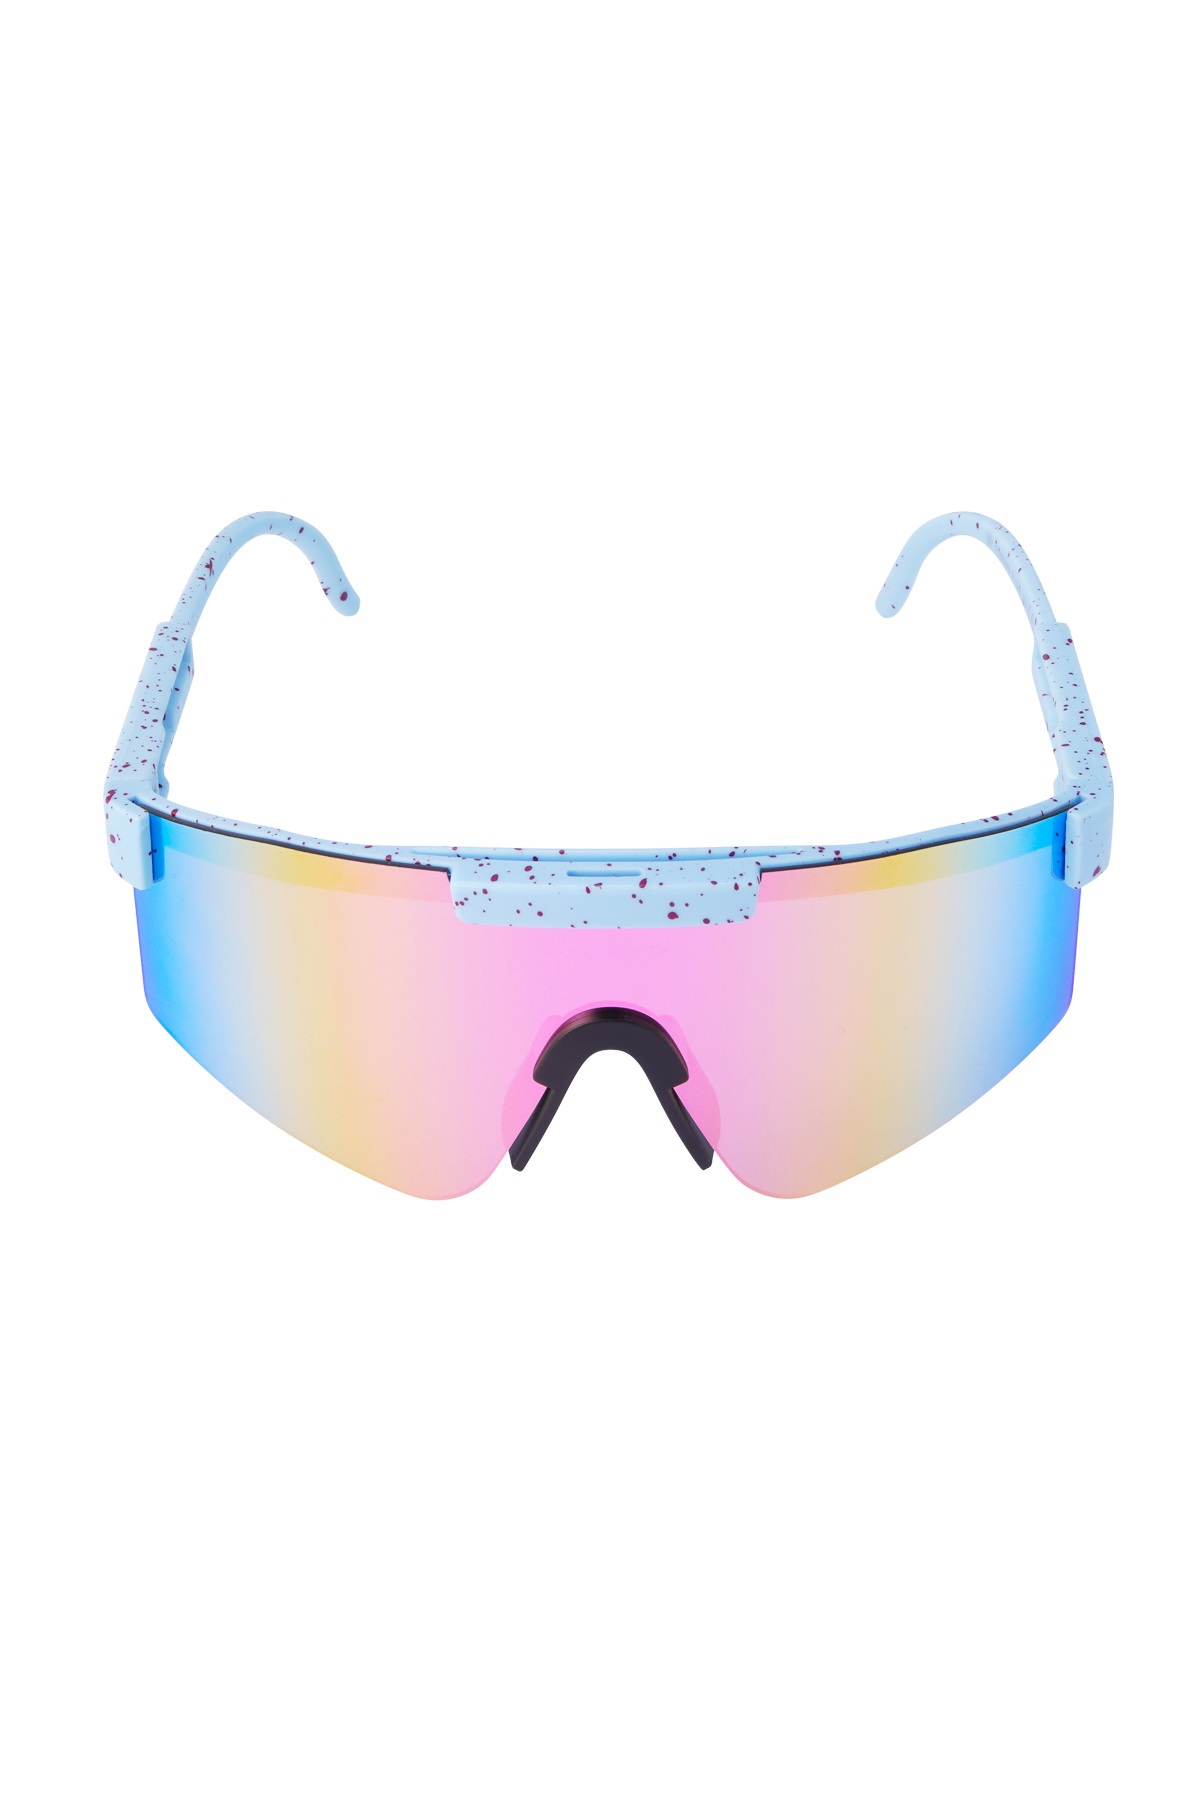 Sunglasses print colored lenses - blue h5 Picture6